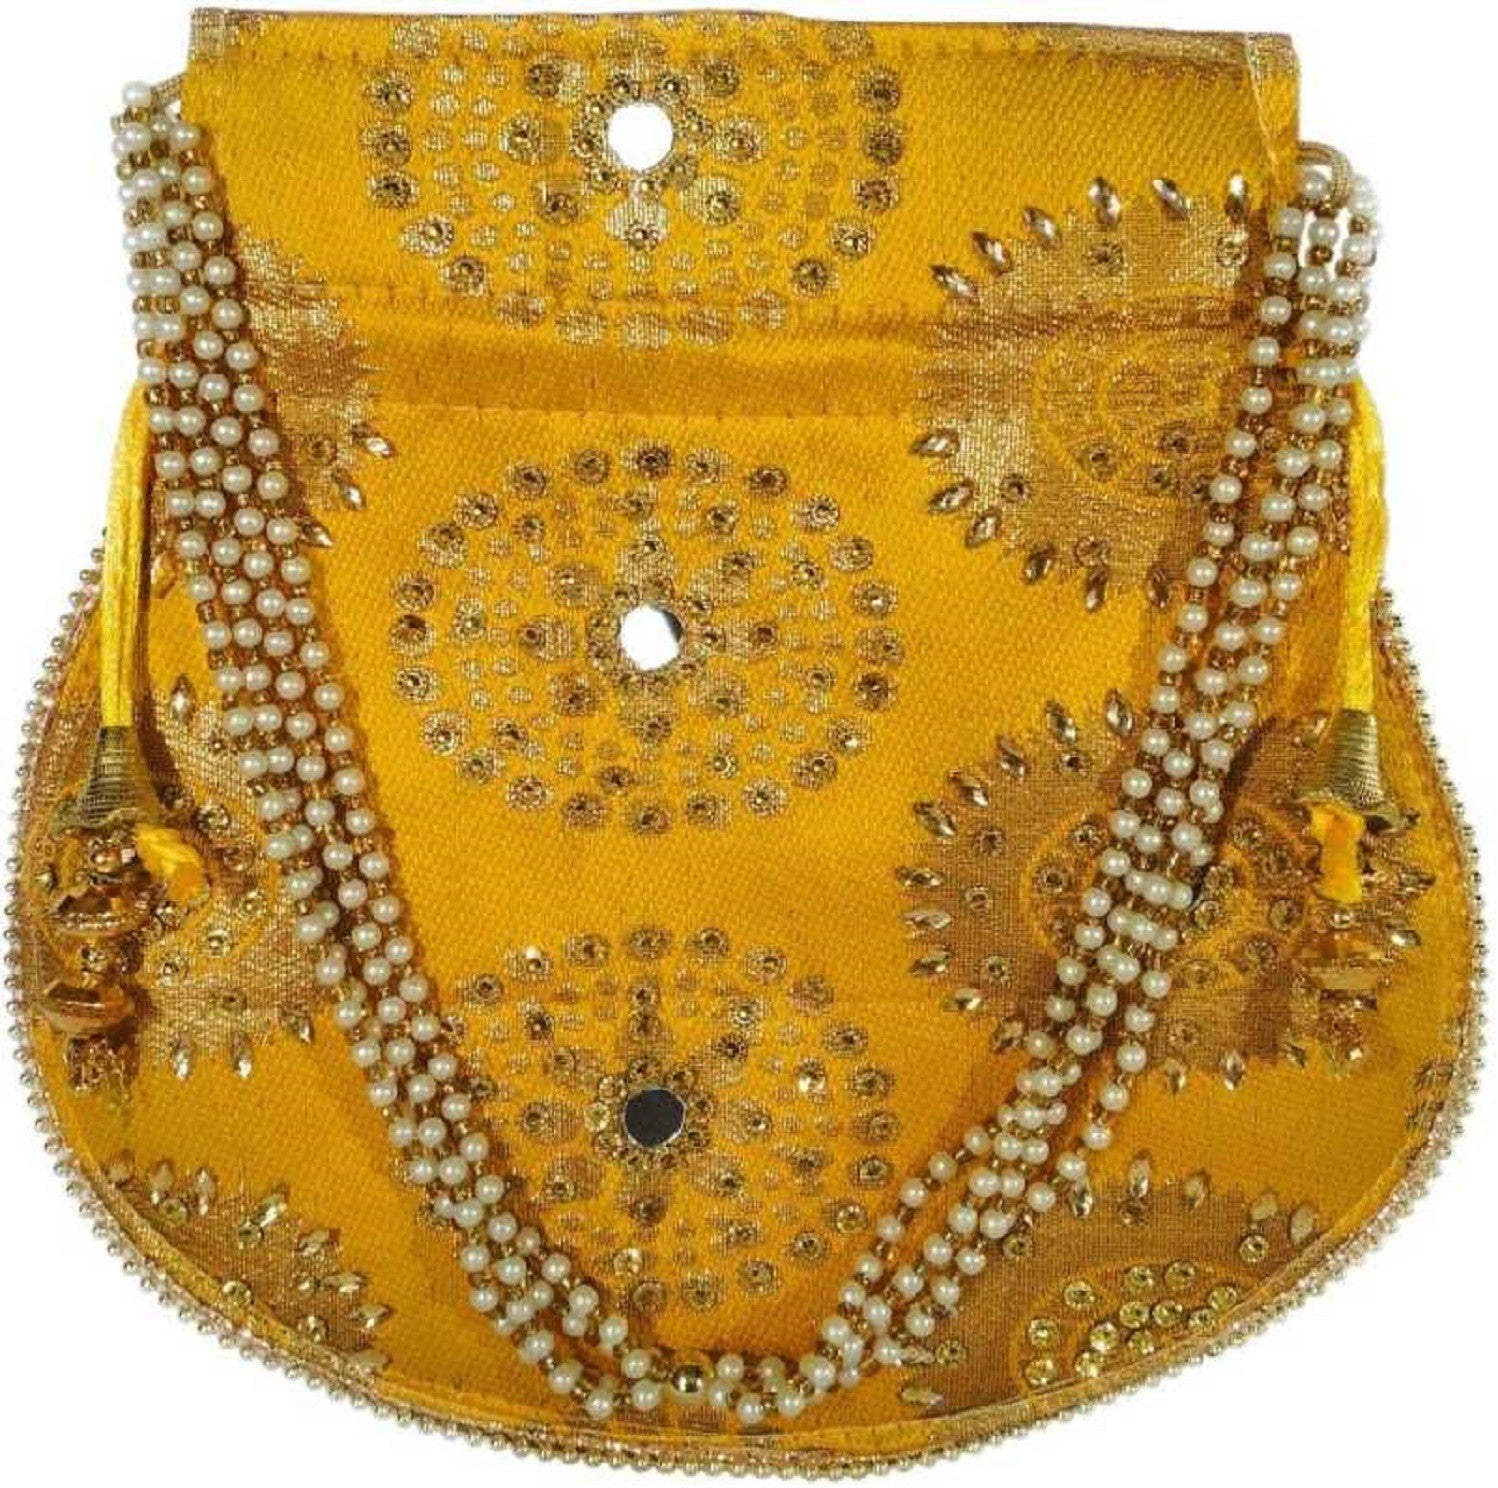 Women's Wedding Partywer Handbag Clutch Purses
Embroidered - Ritzie